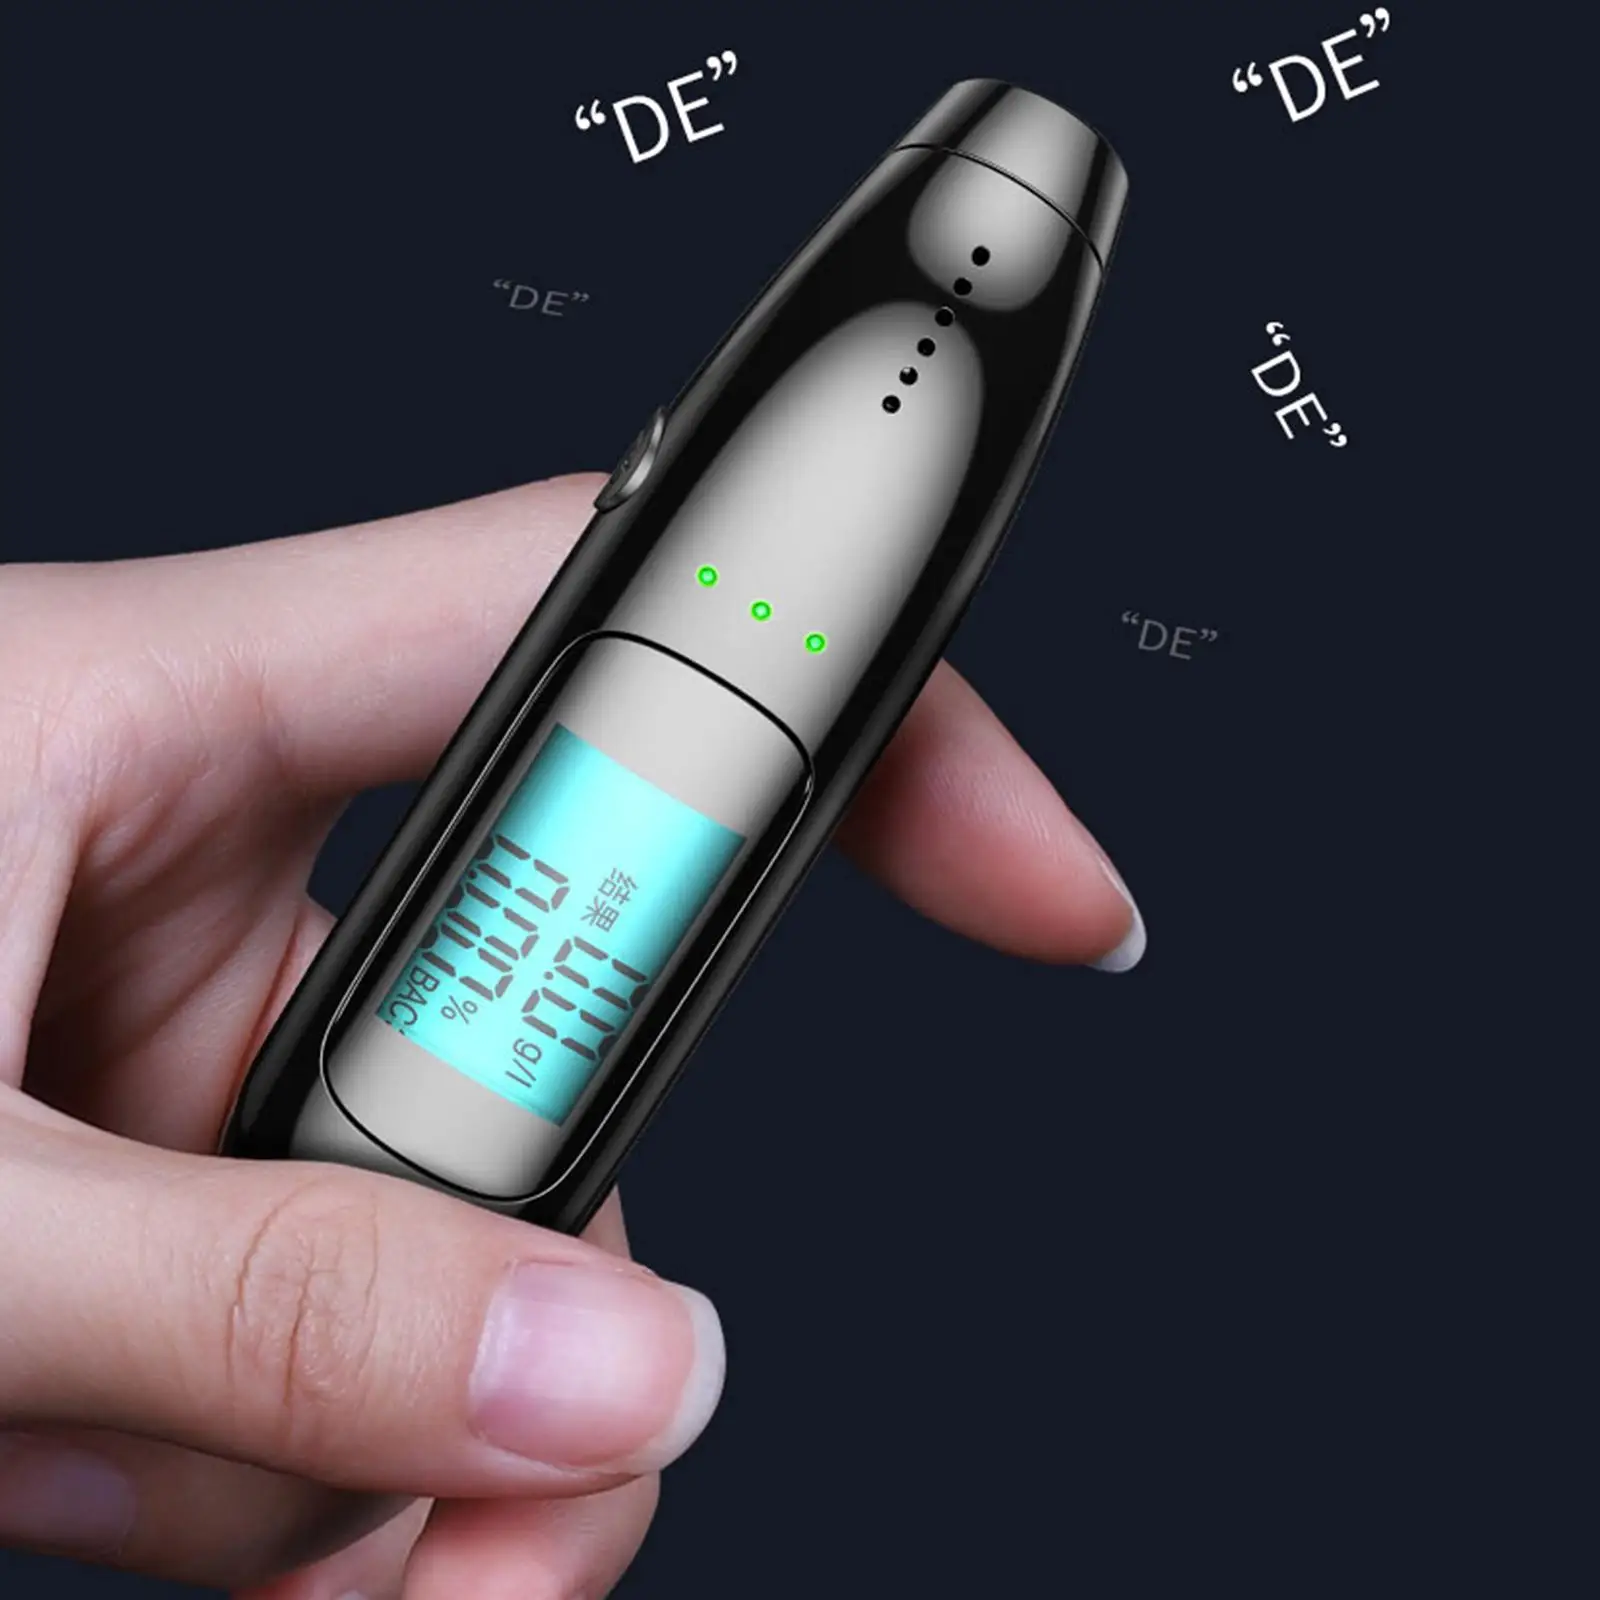 Mini LCD Digital Breath Alcohol Tester Lightweight Alarm for Drivers